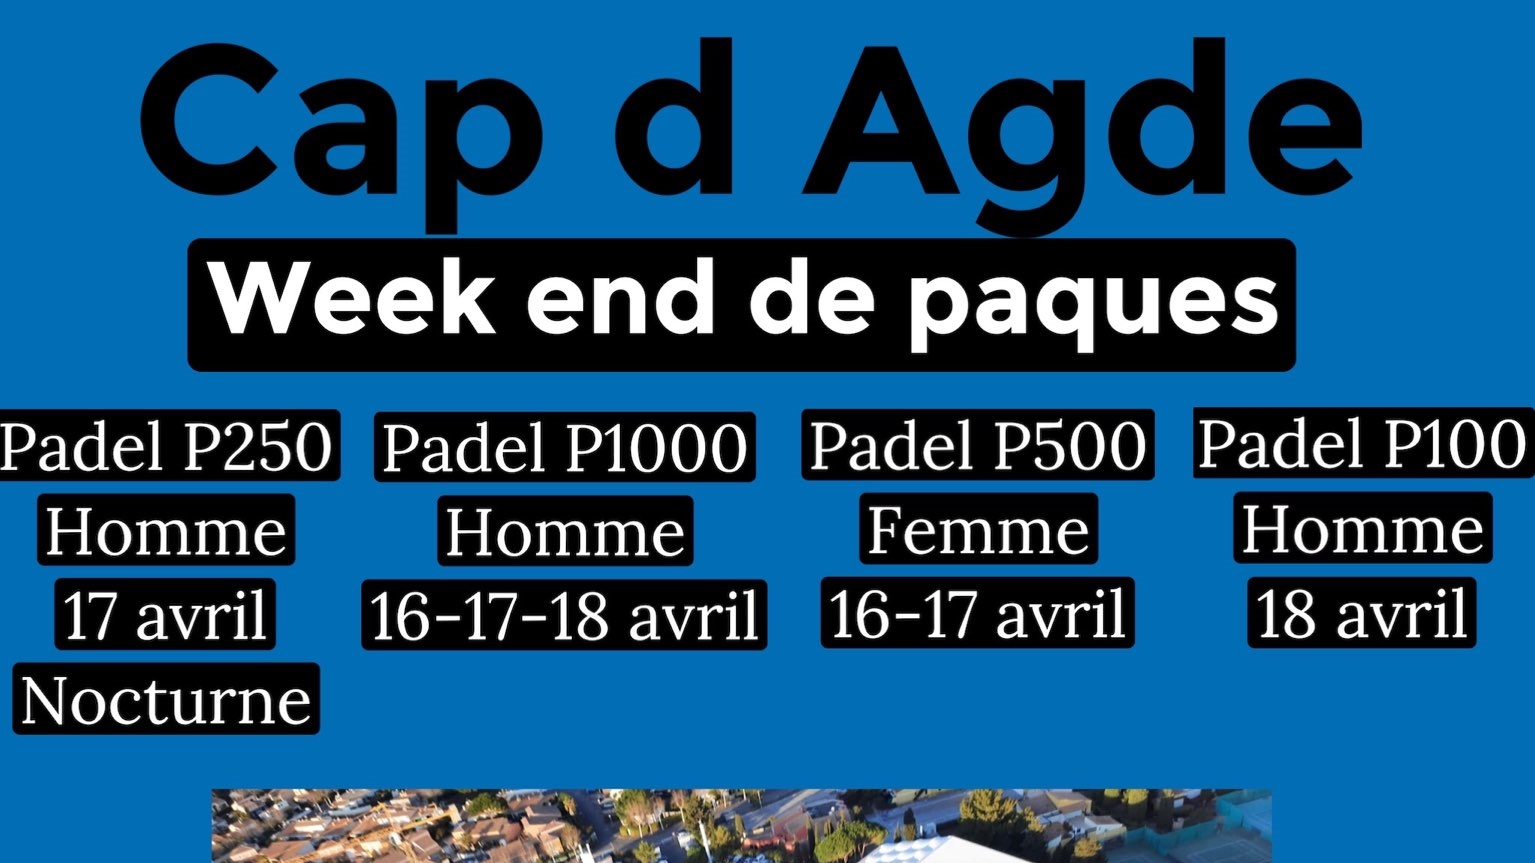 Cap d'Agde: P100 to P1000 from April 16 to 18